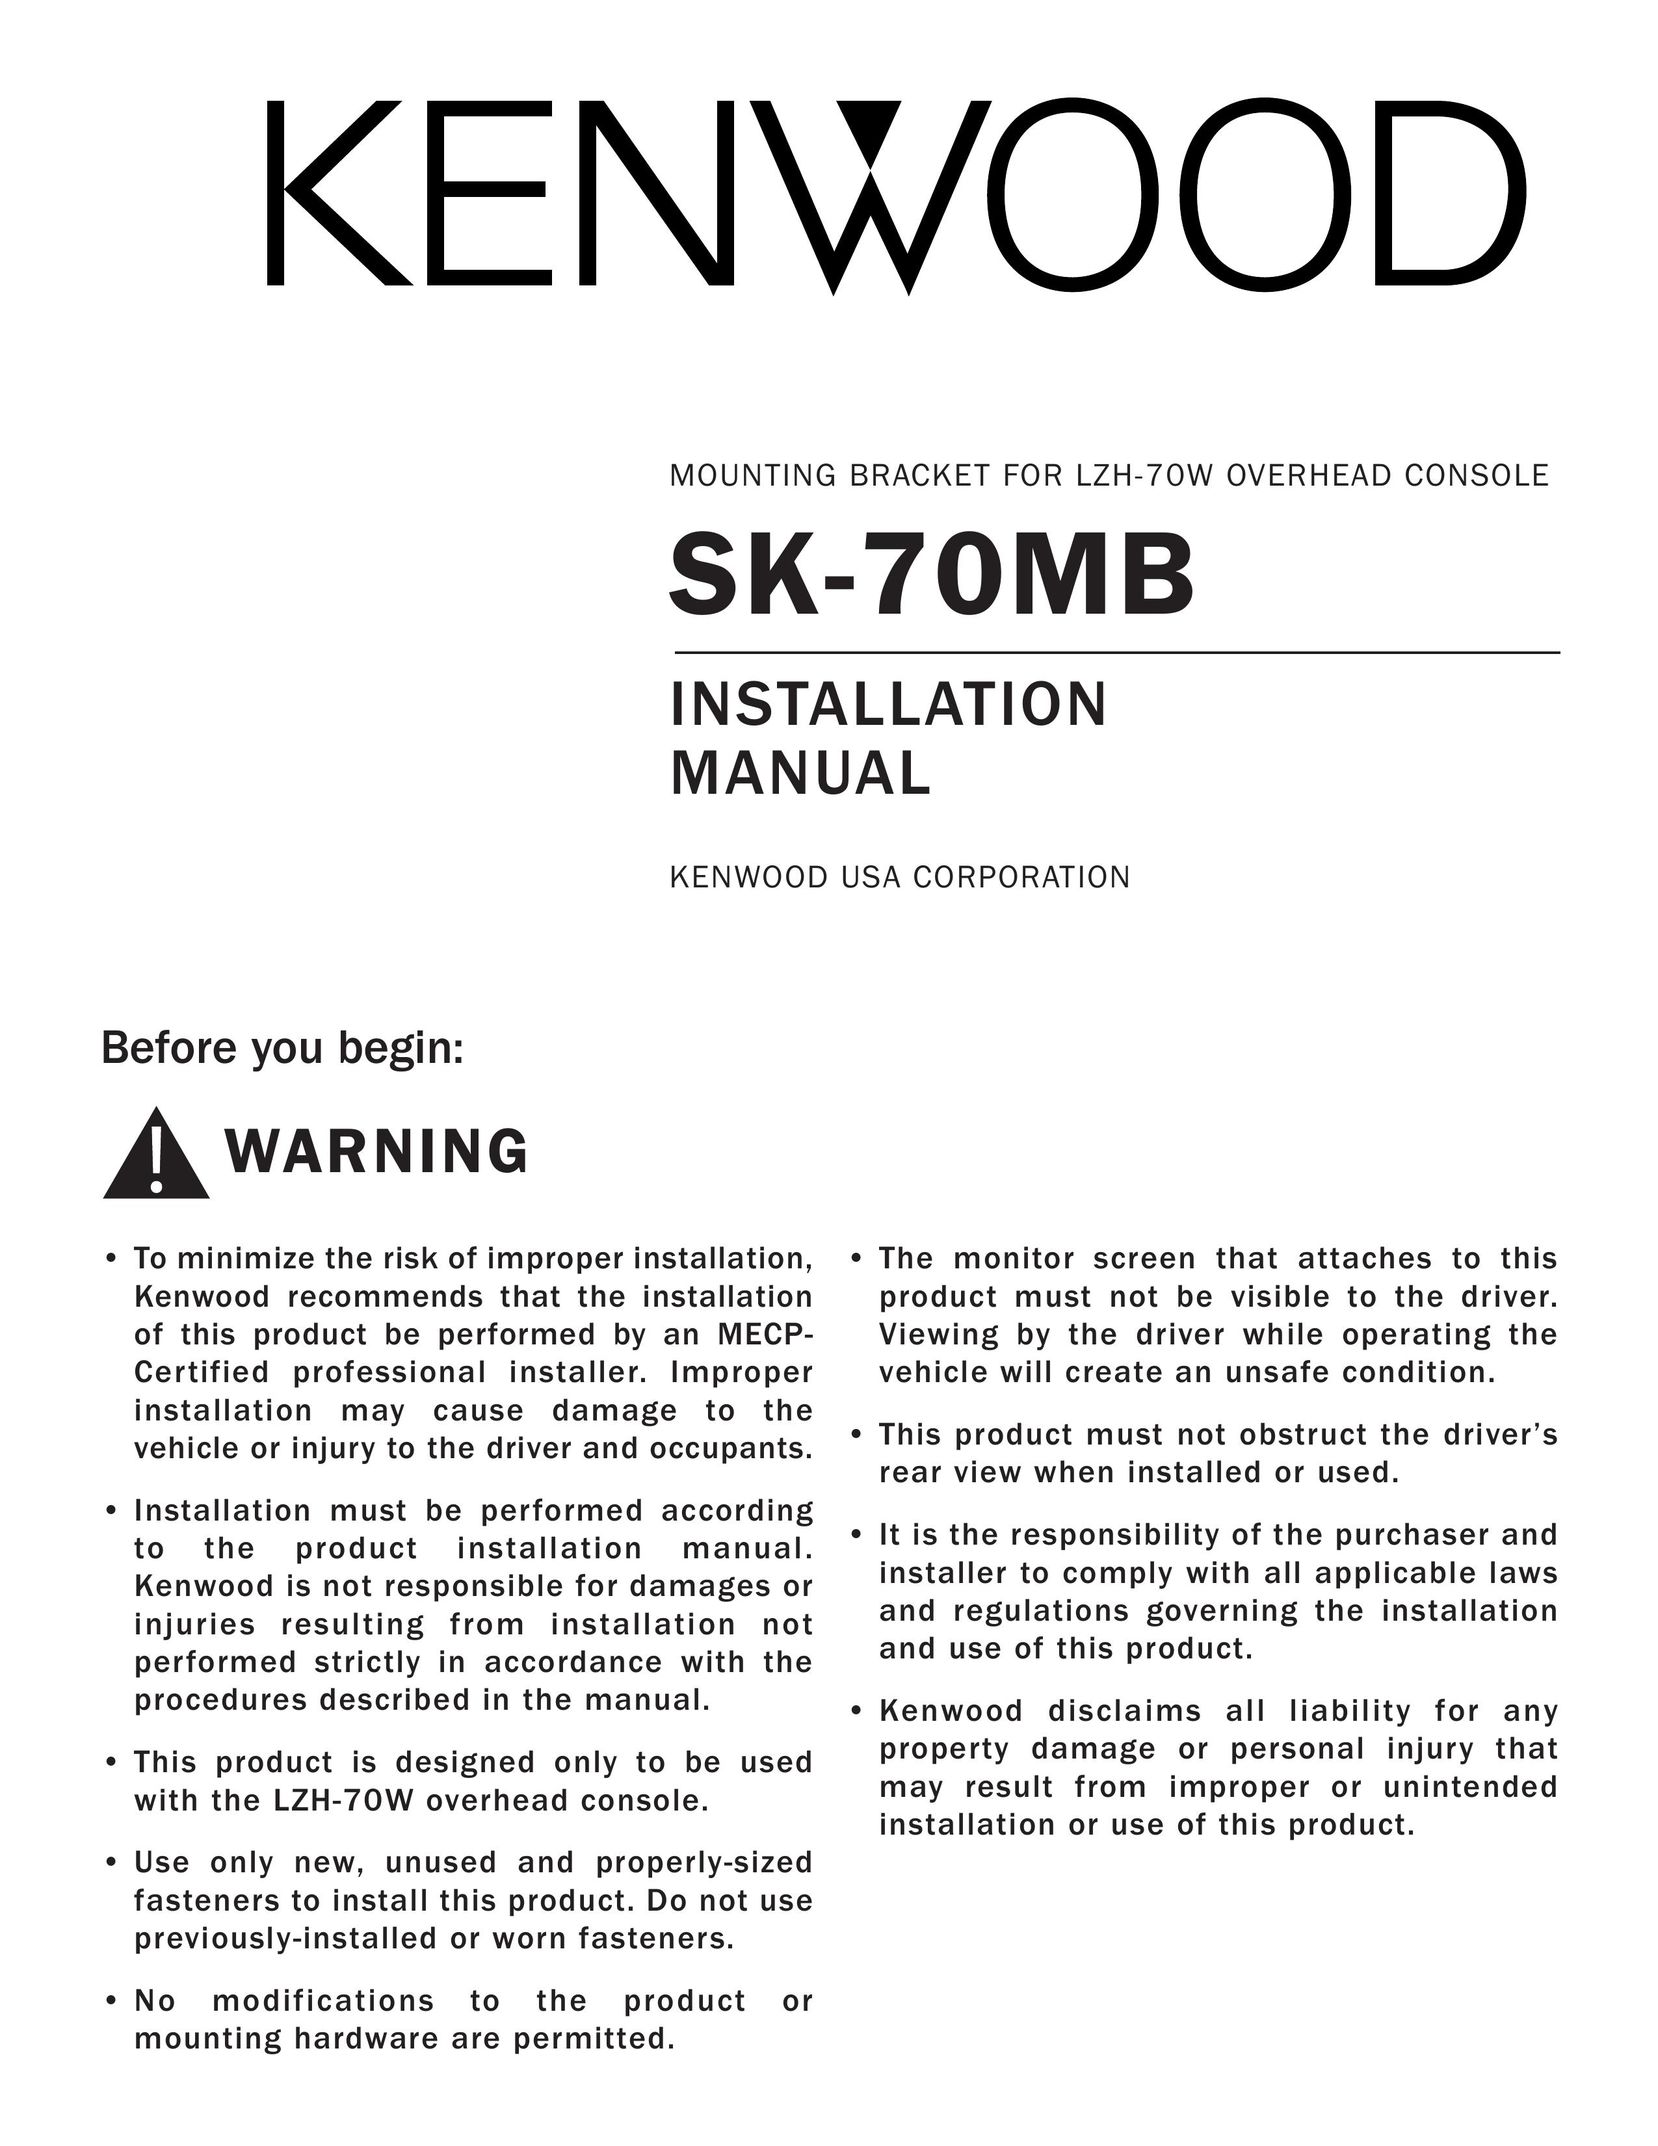 Kenwood SK-70MB TV Mount User Manual